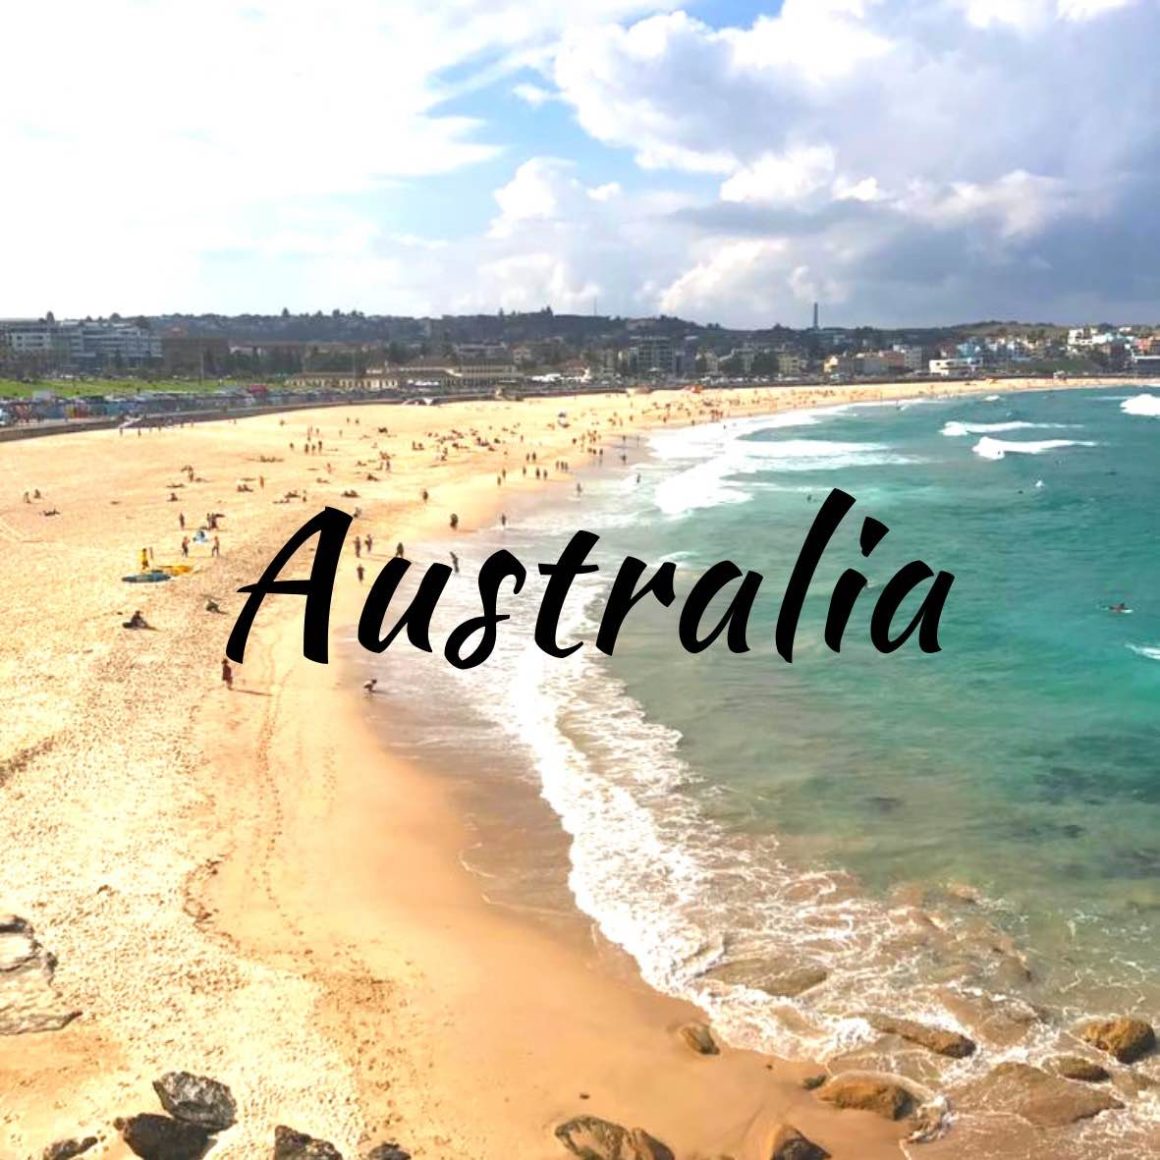 australia travel guide